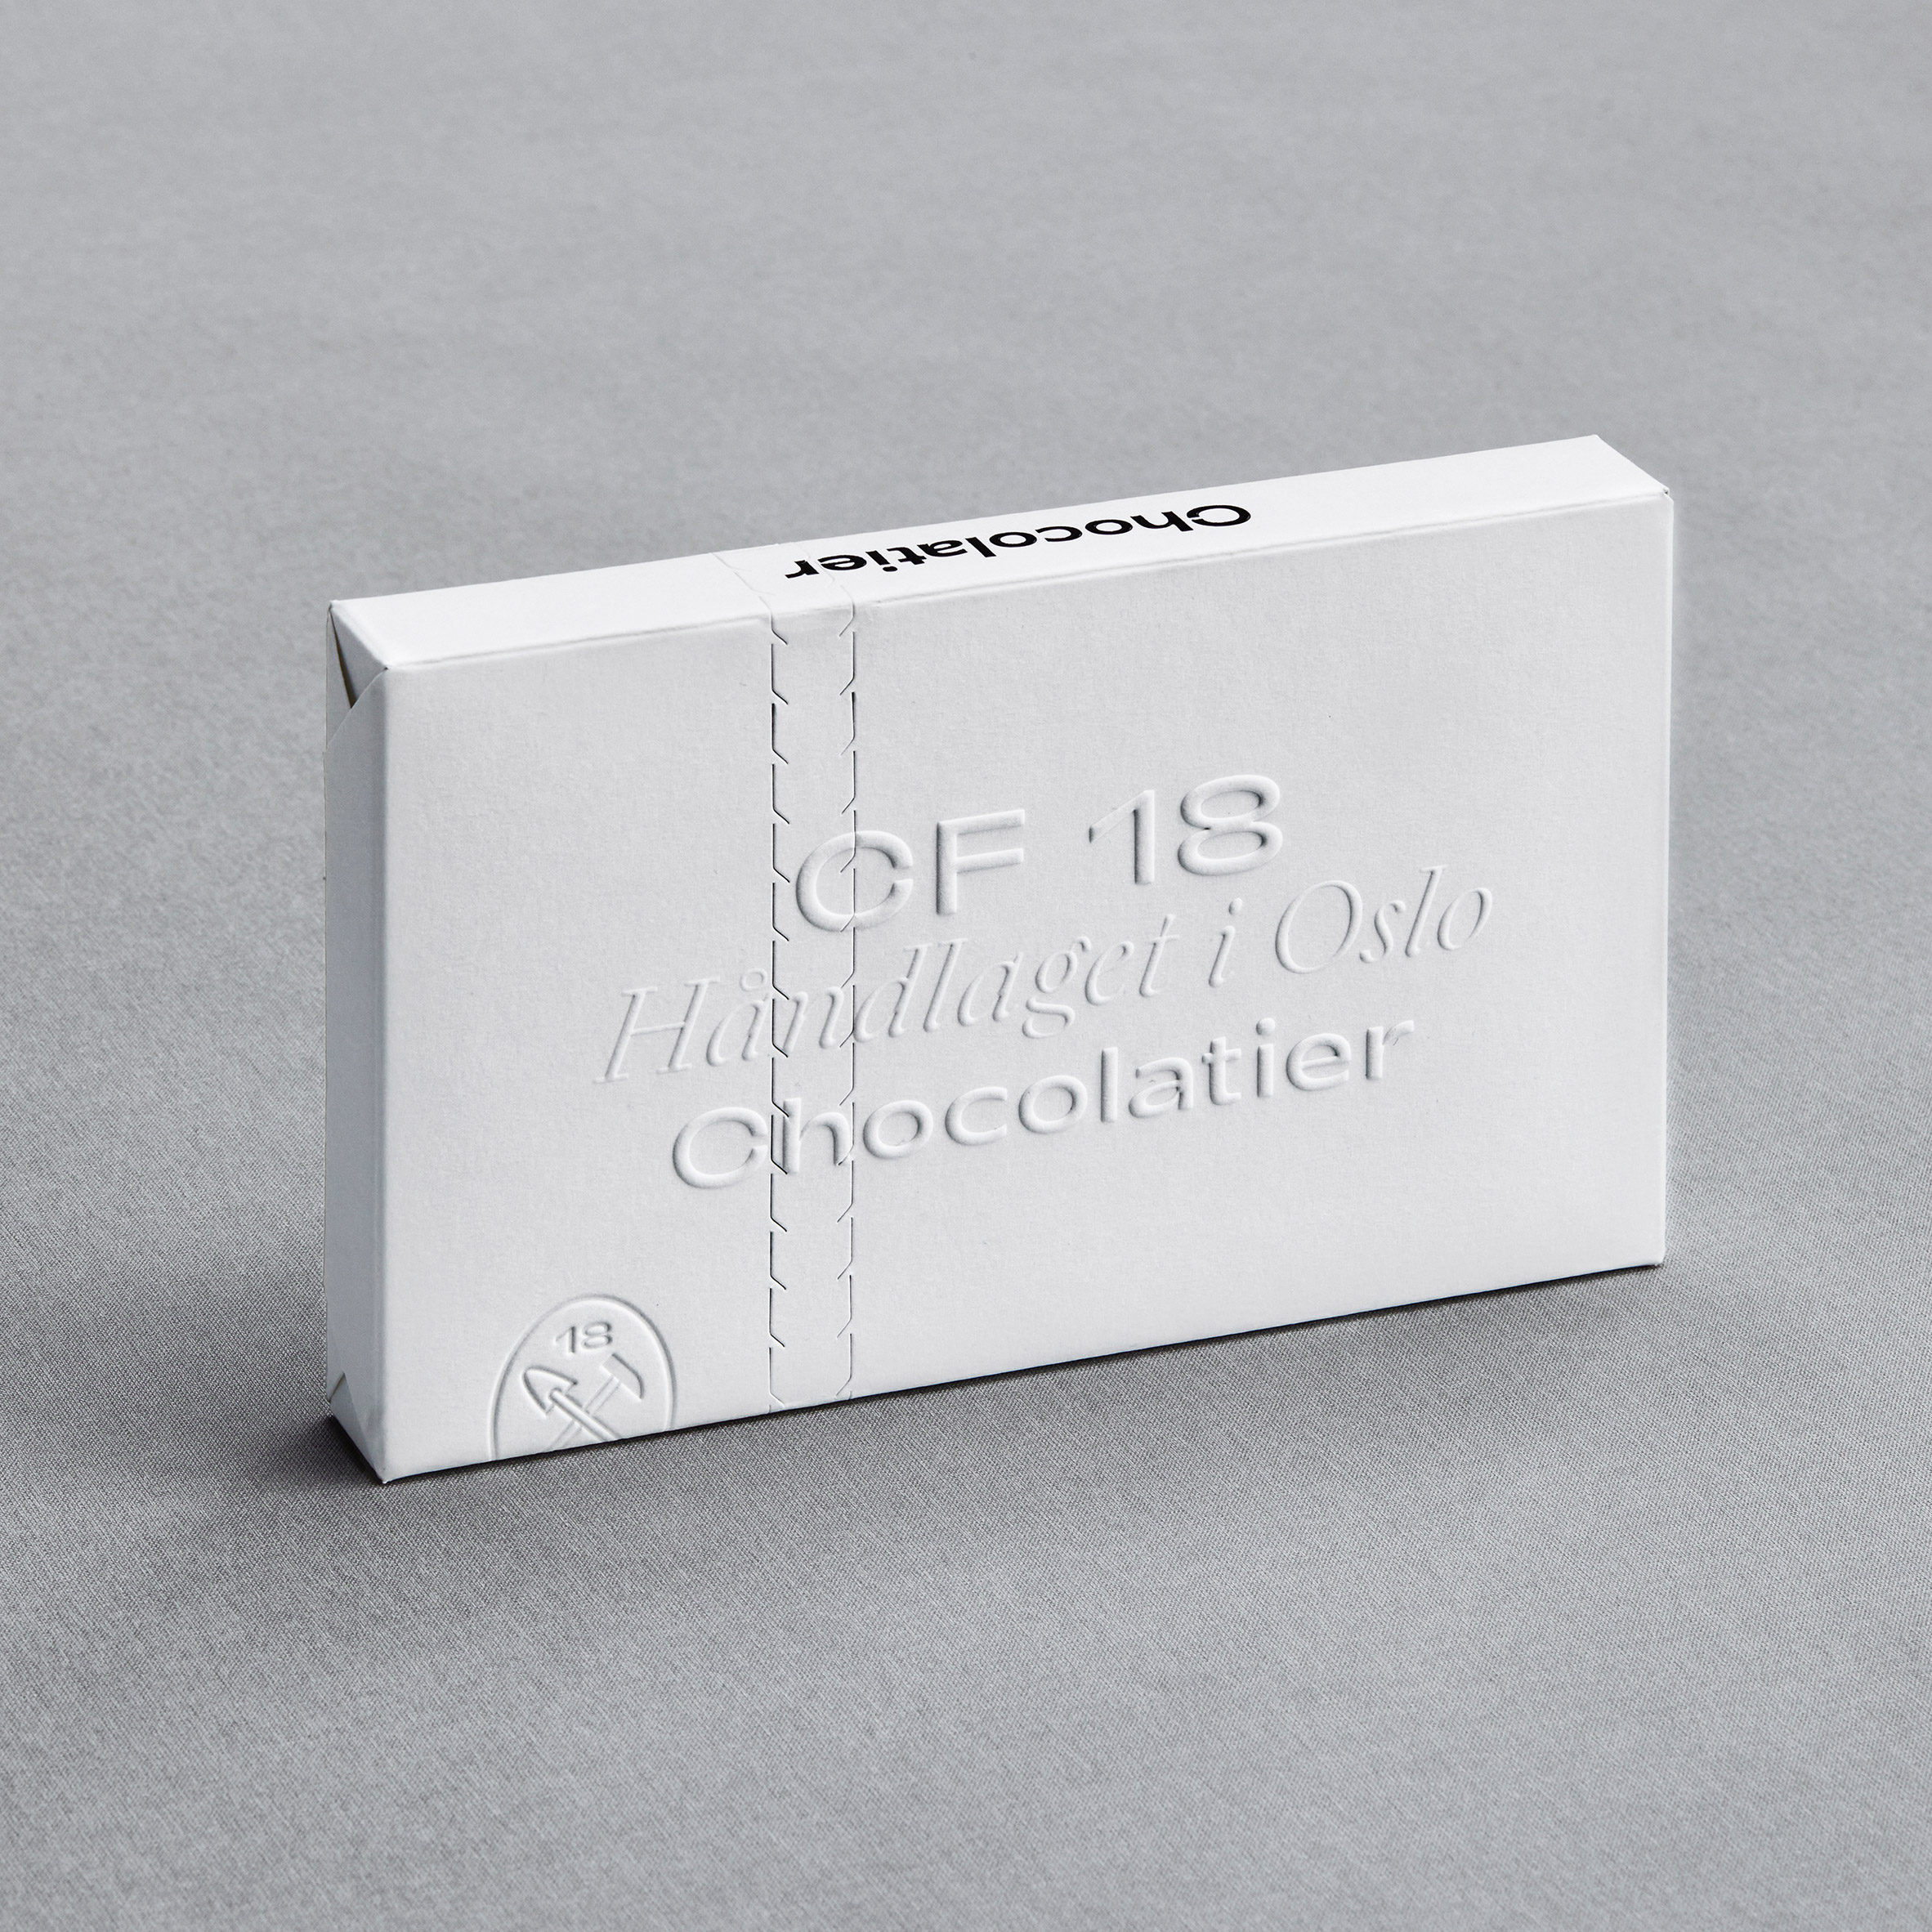 OlssønBarbieri cuts out plastic in minimalist CF18 Chocolatier packaging